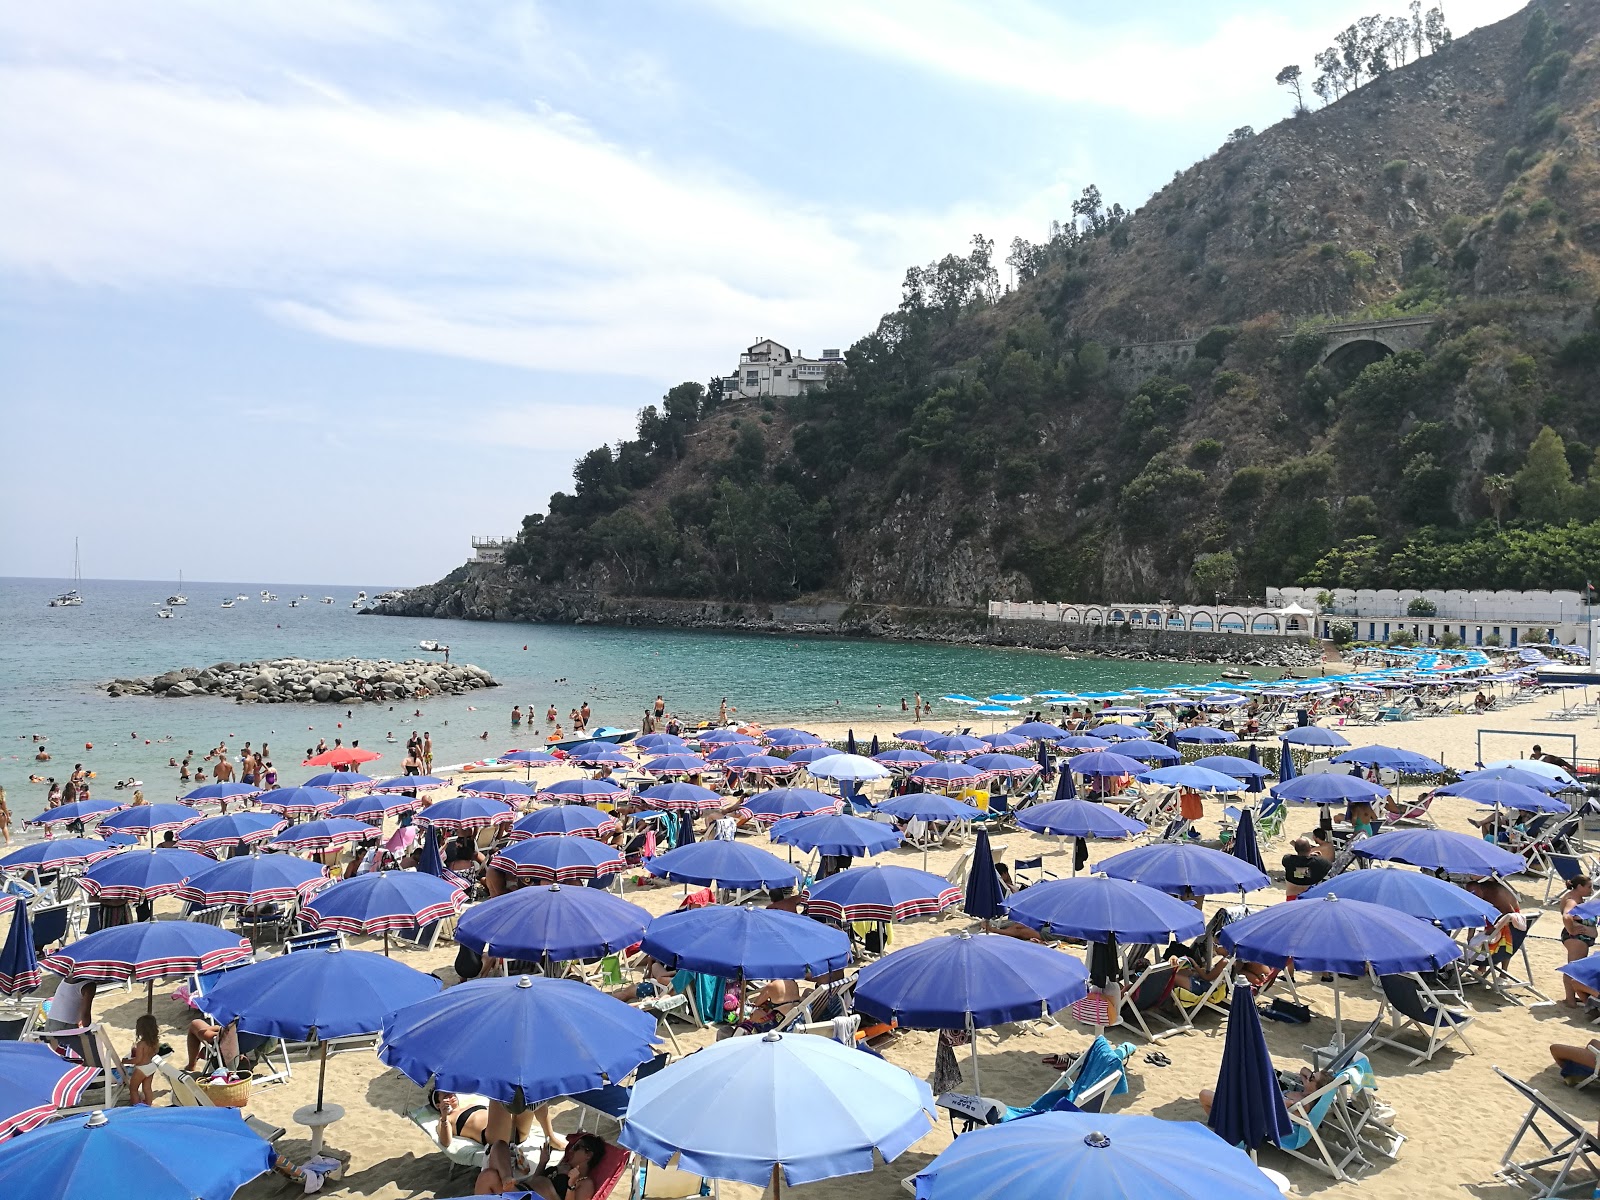 Spiaggia di Copanello'in fotoğrafı geniş plaj ile birlikte